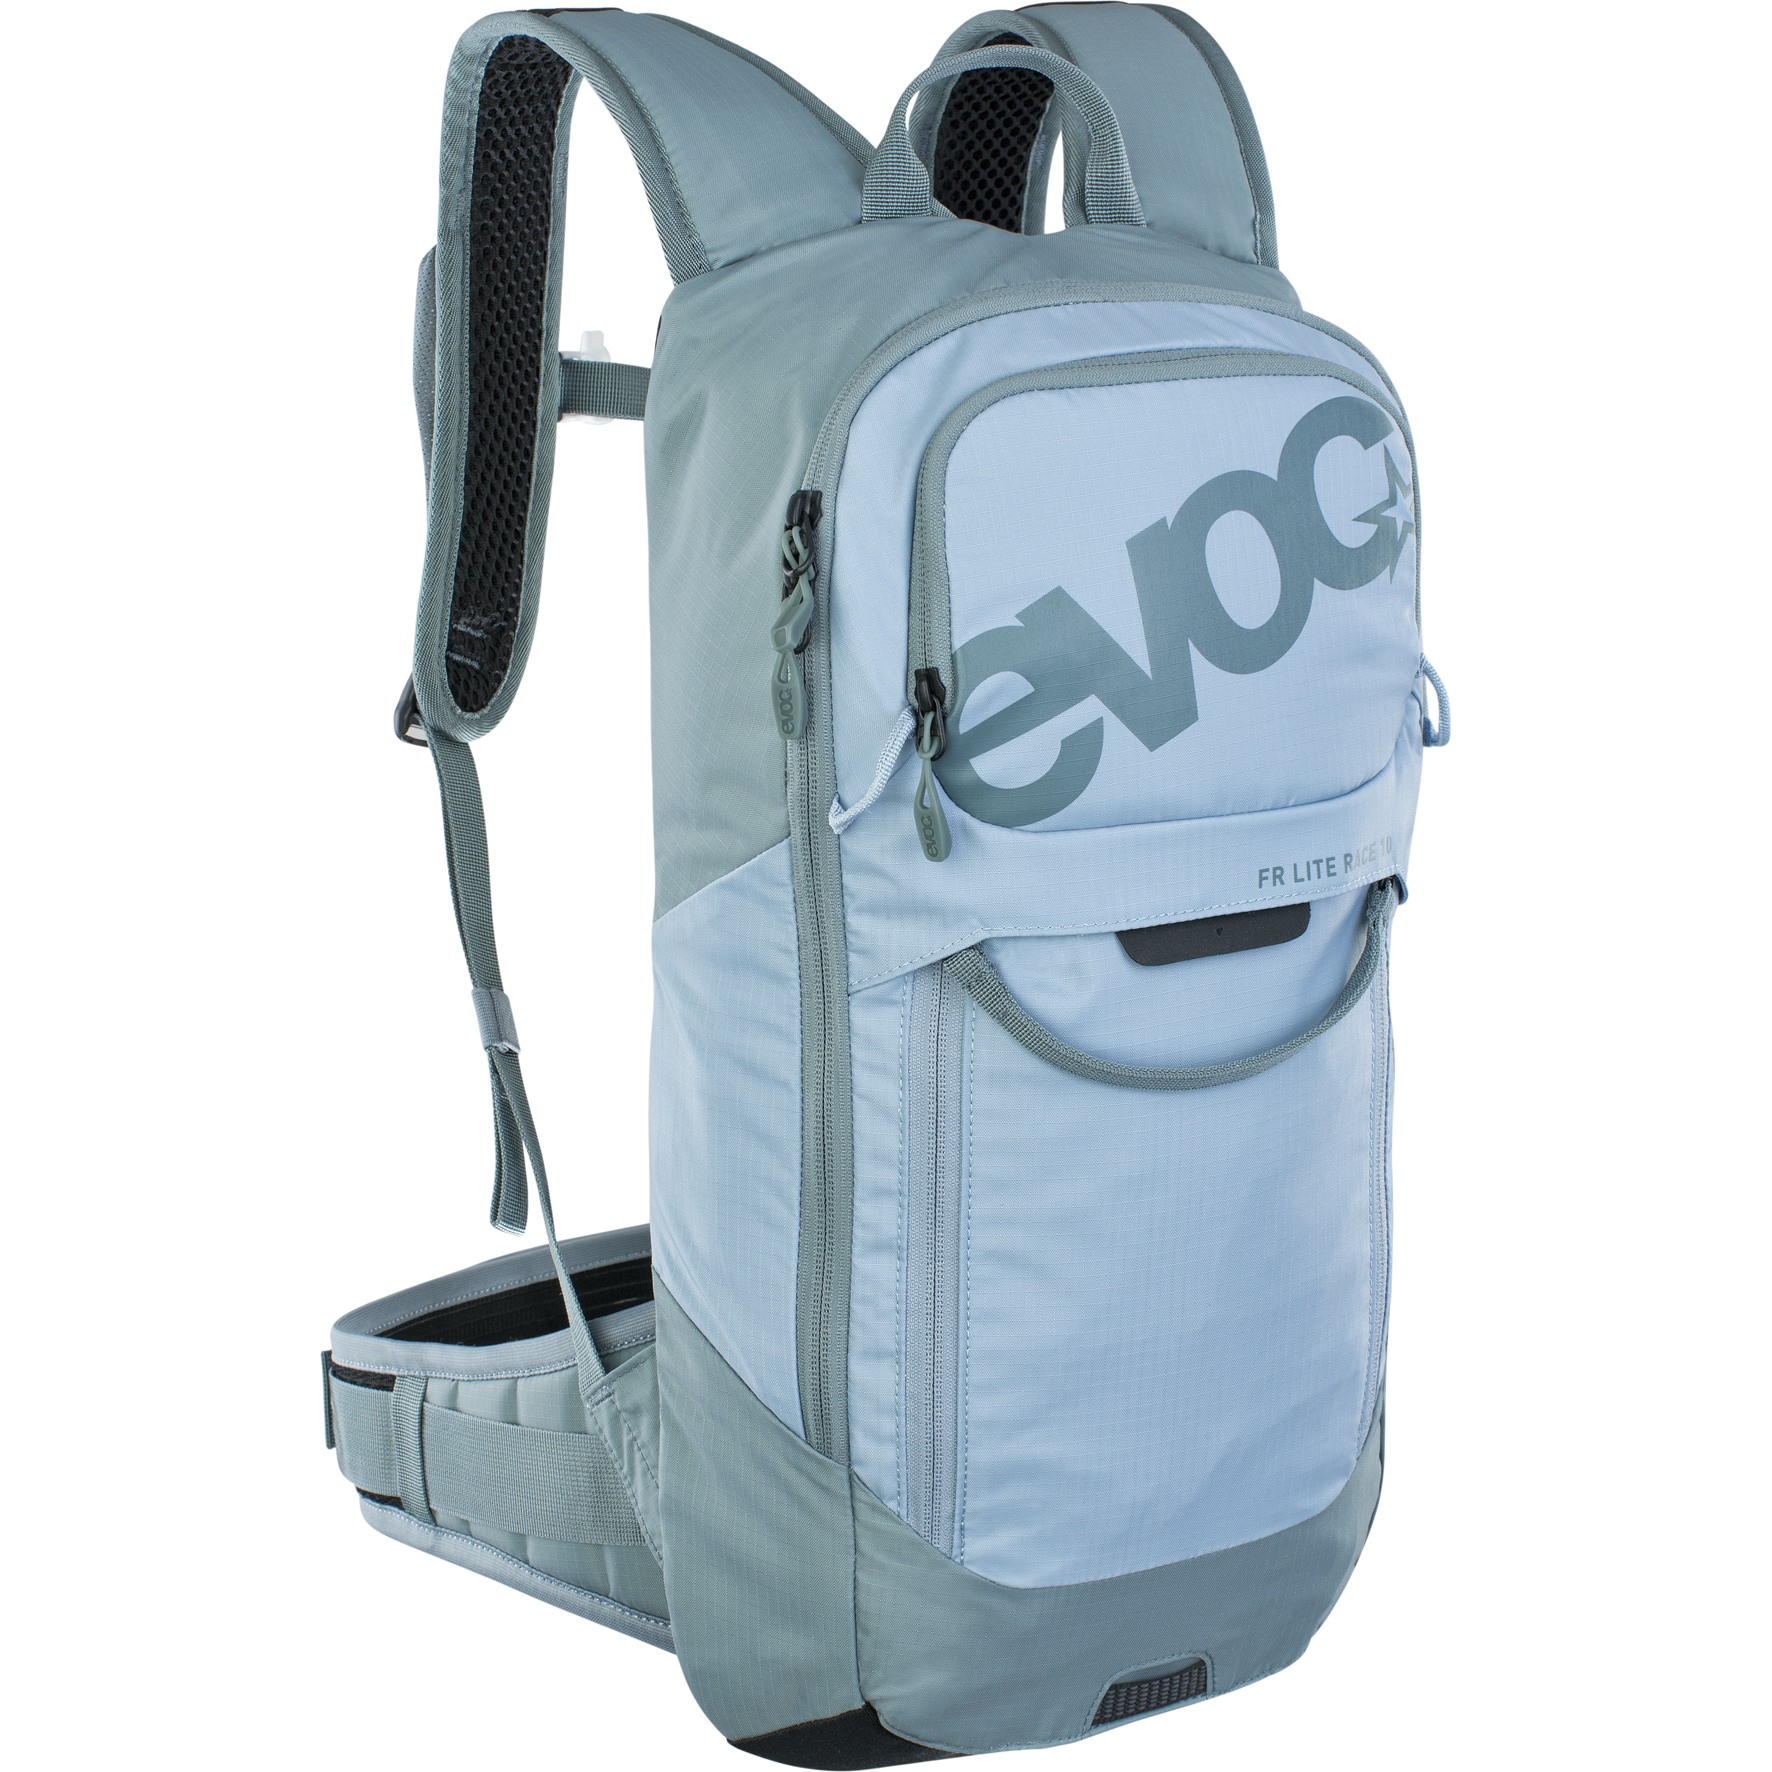 Picture of EVOC Fr Lite Race Protector Backpack - 10 L - Steel/Copen Blue